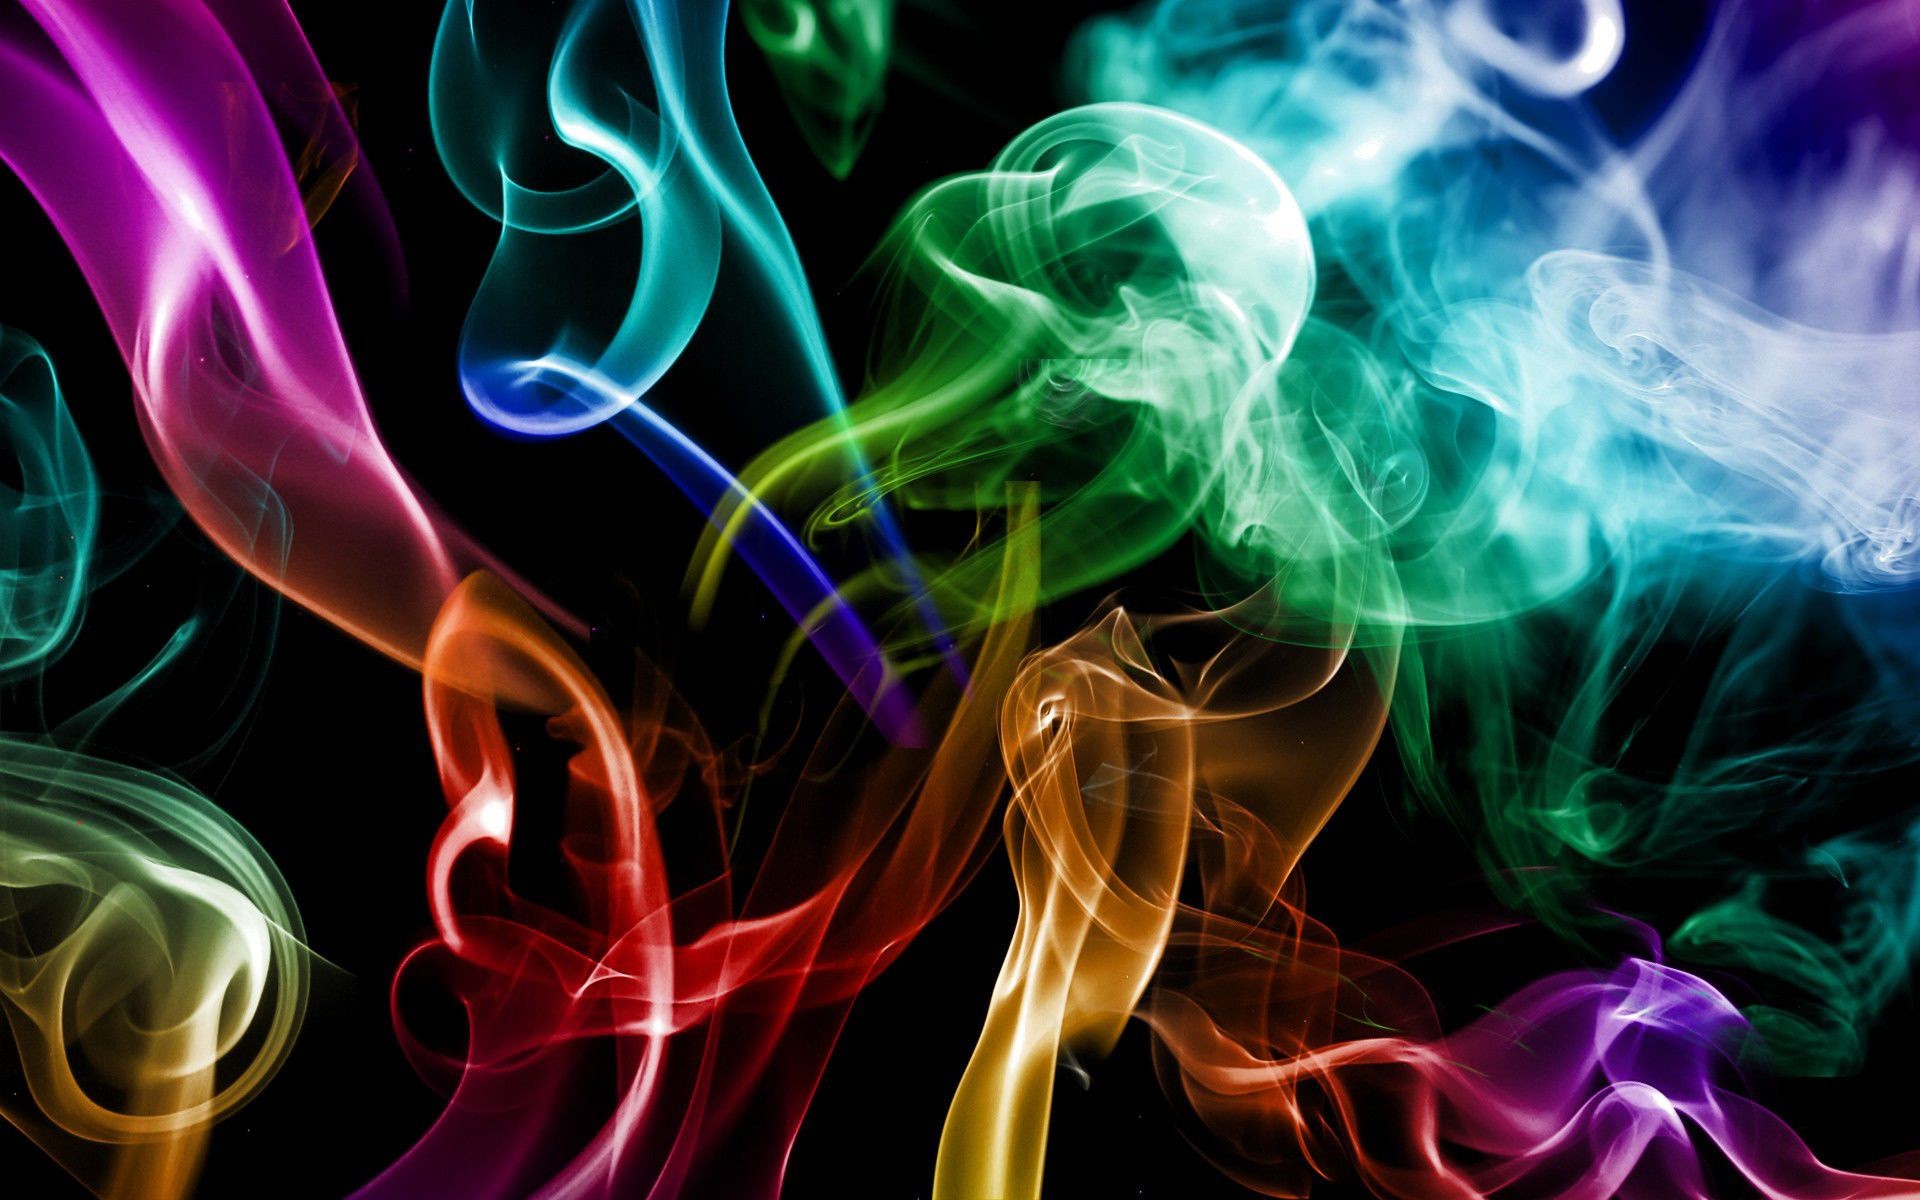 abstract dynamic wave flame smoke motion curve design incense energy light mist pattern burnt flow art effect desktop shape background